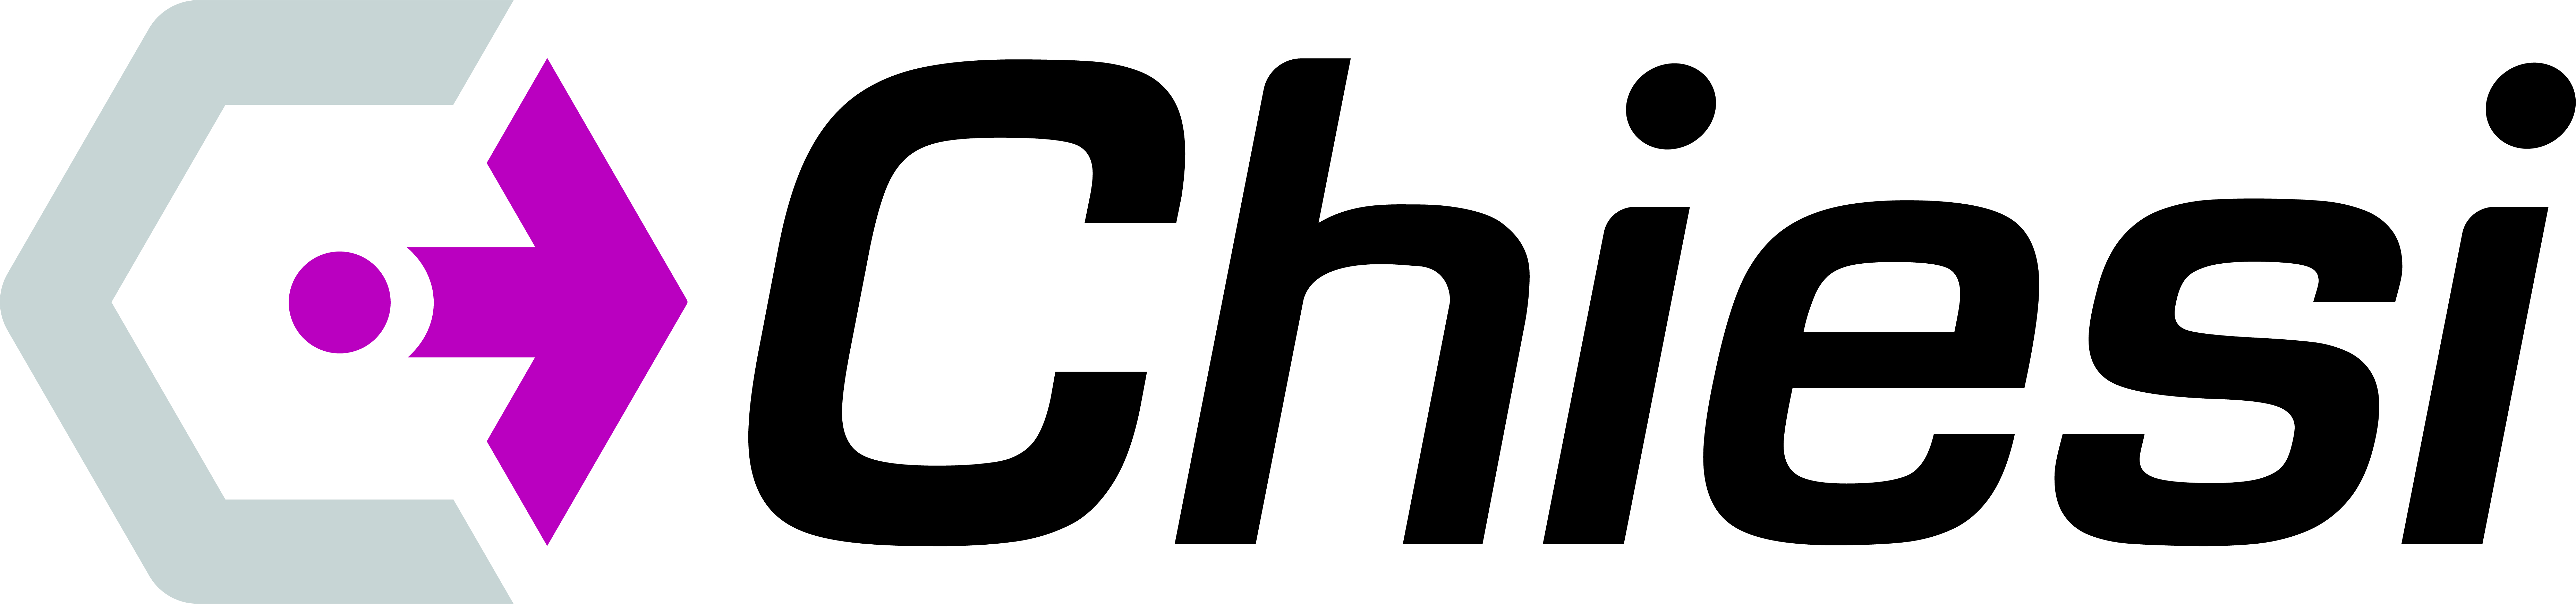 Chiesi_Logo_-_1.Primary.jpg